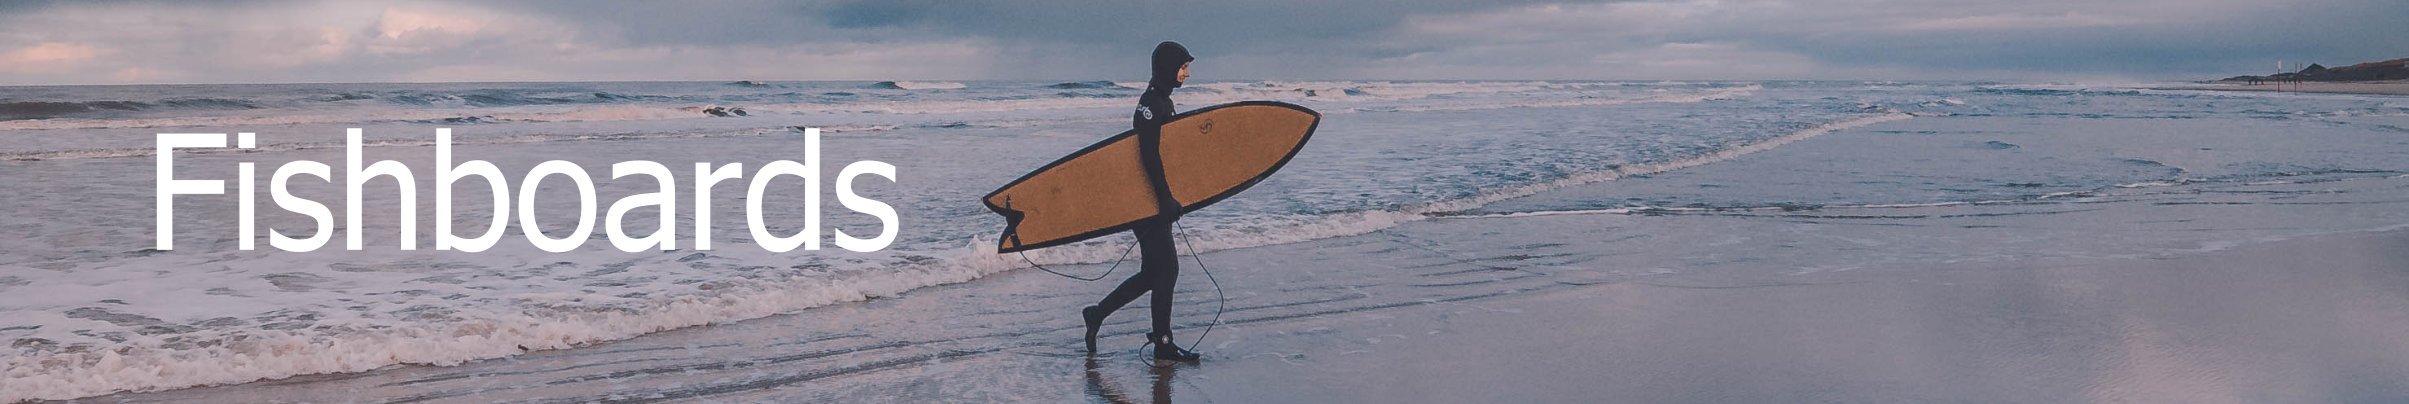 Fish surfboard buy online europe surfshop header